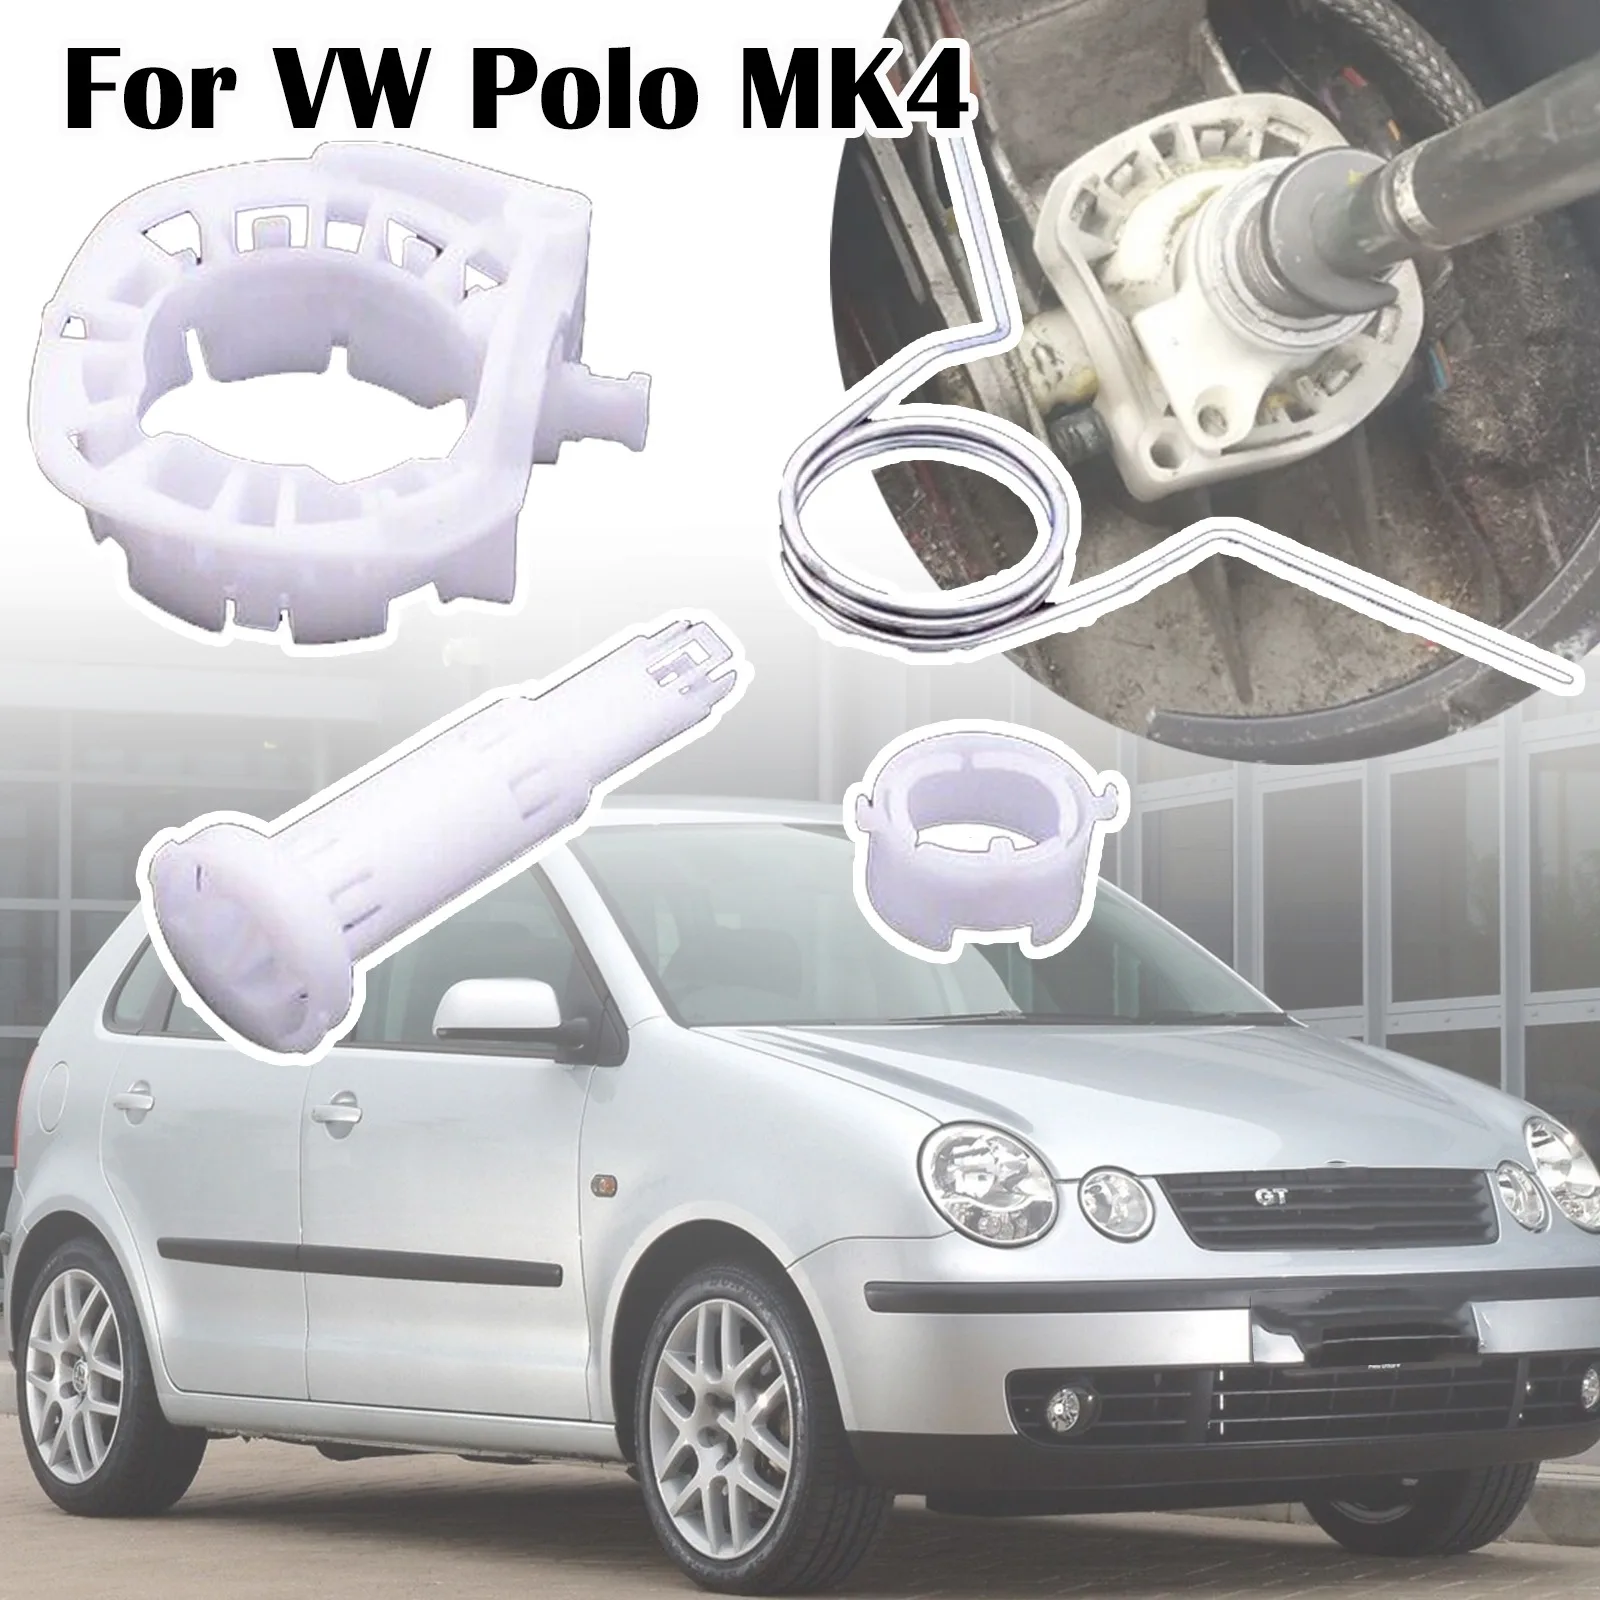 

For VW Polo MK4 MK5 9N 9A 6R1 6C1 Car Gear Shift Lever Selector GearBox Socket Bush Shell Spring Bearing Repair kit 2001 - 2014